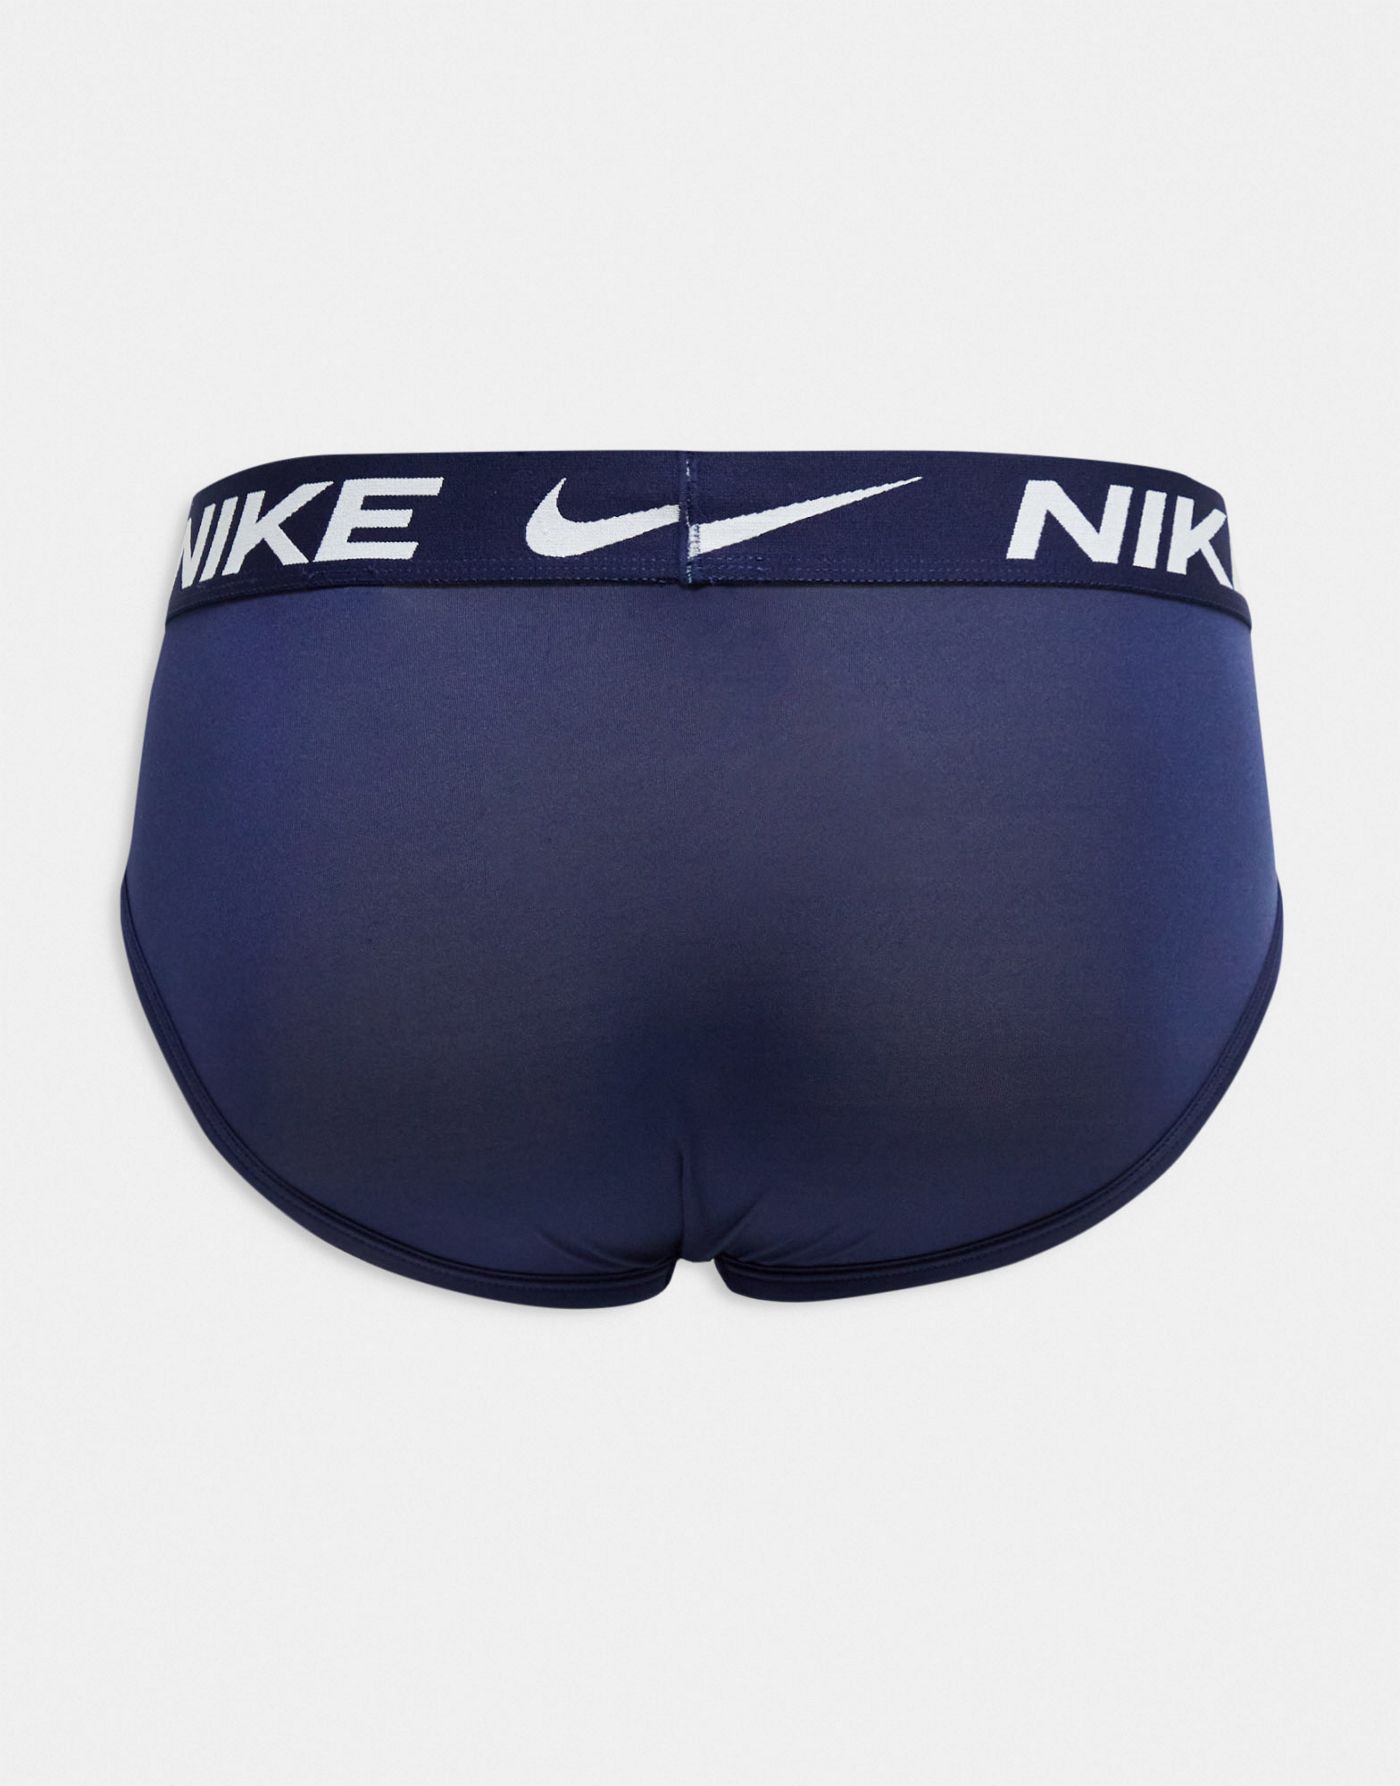 Nike Dri-Fit Essential Microfiber hip briefs 3 pack in navy/blue